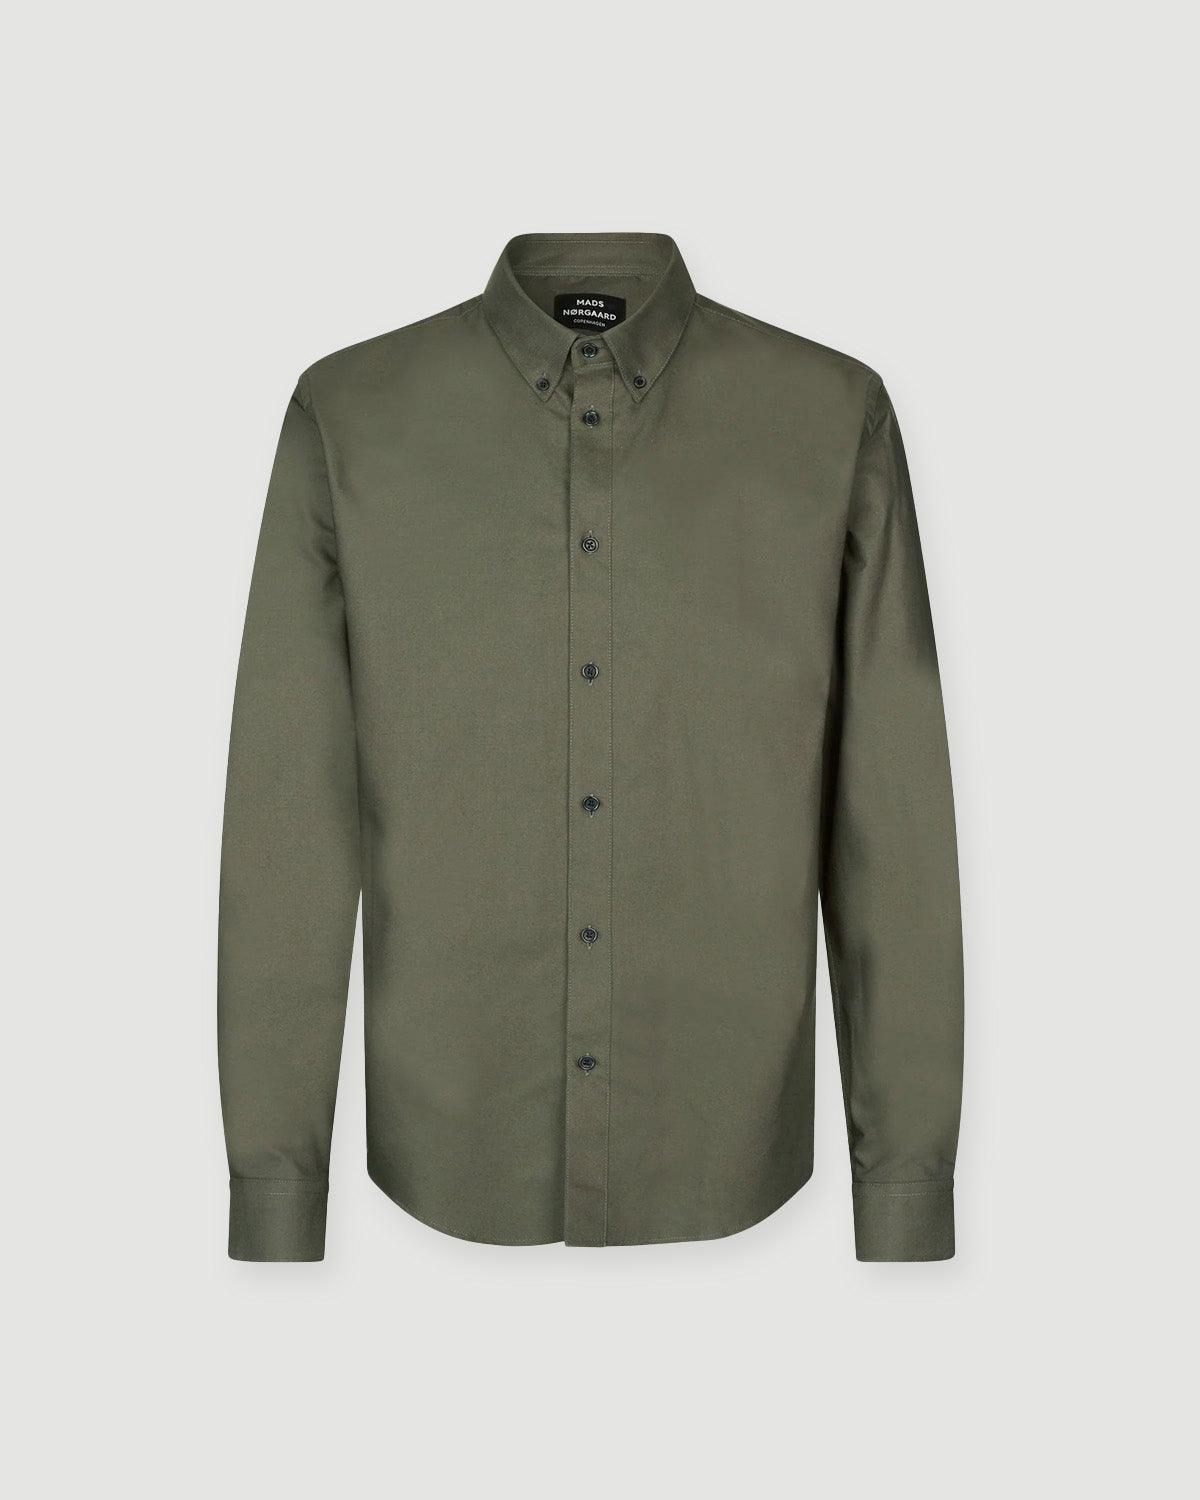 Cotton Oxford Sune Shirt - Mads Nørgaard - Kul og Koks